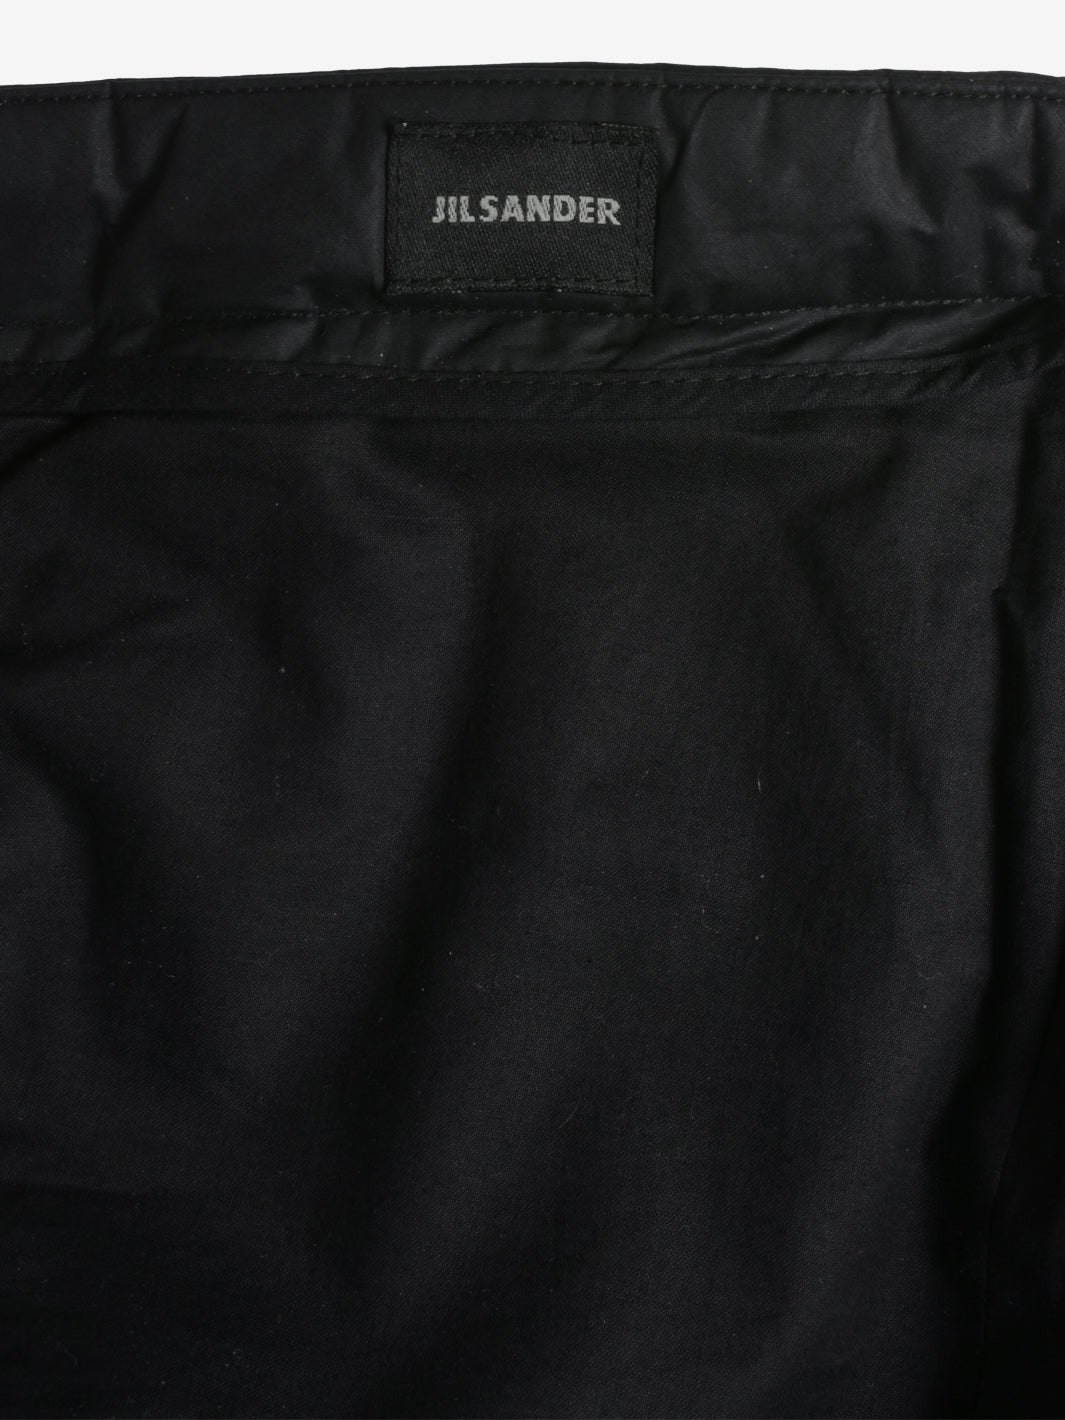 Jil Sander Black Trouser